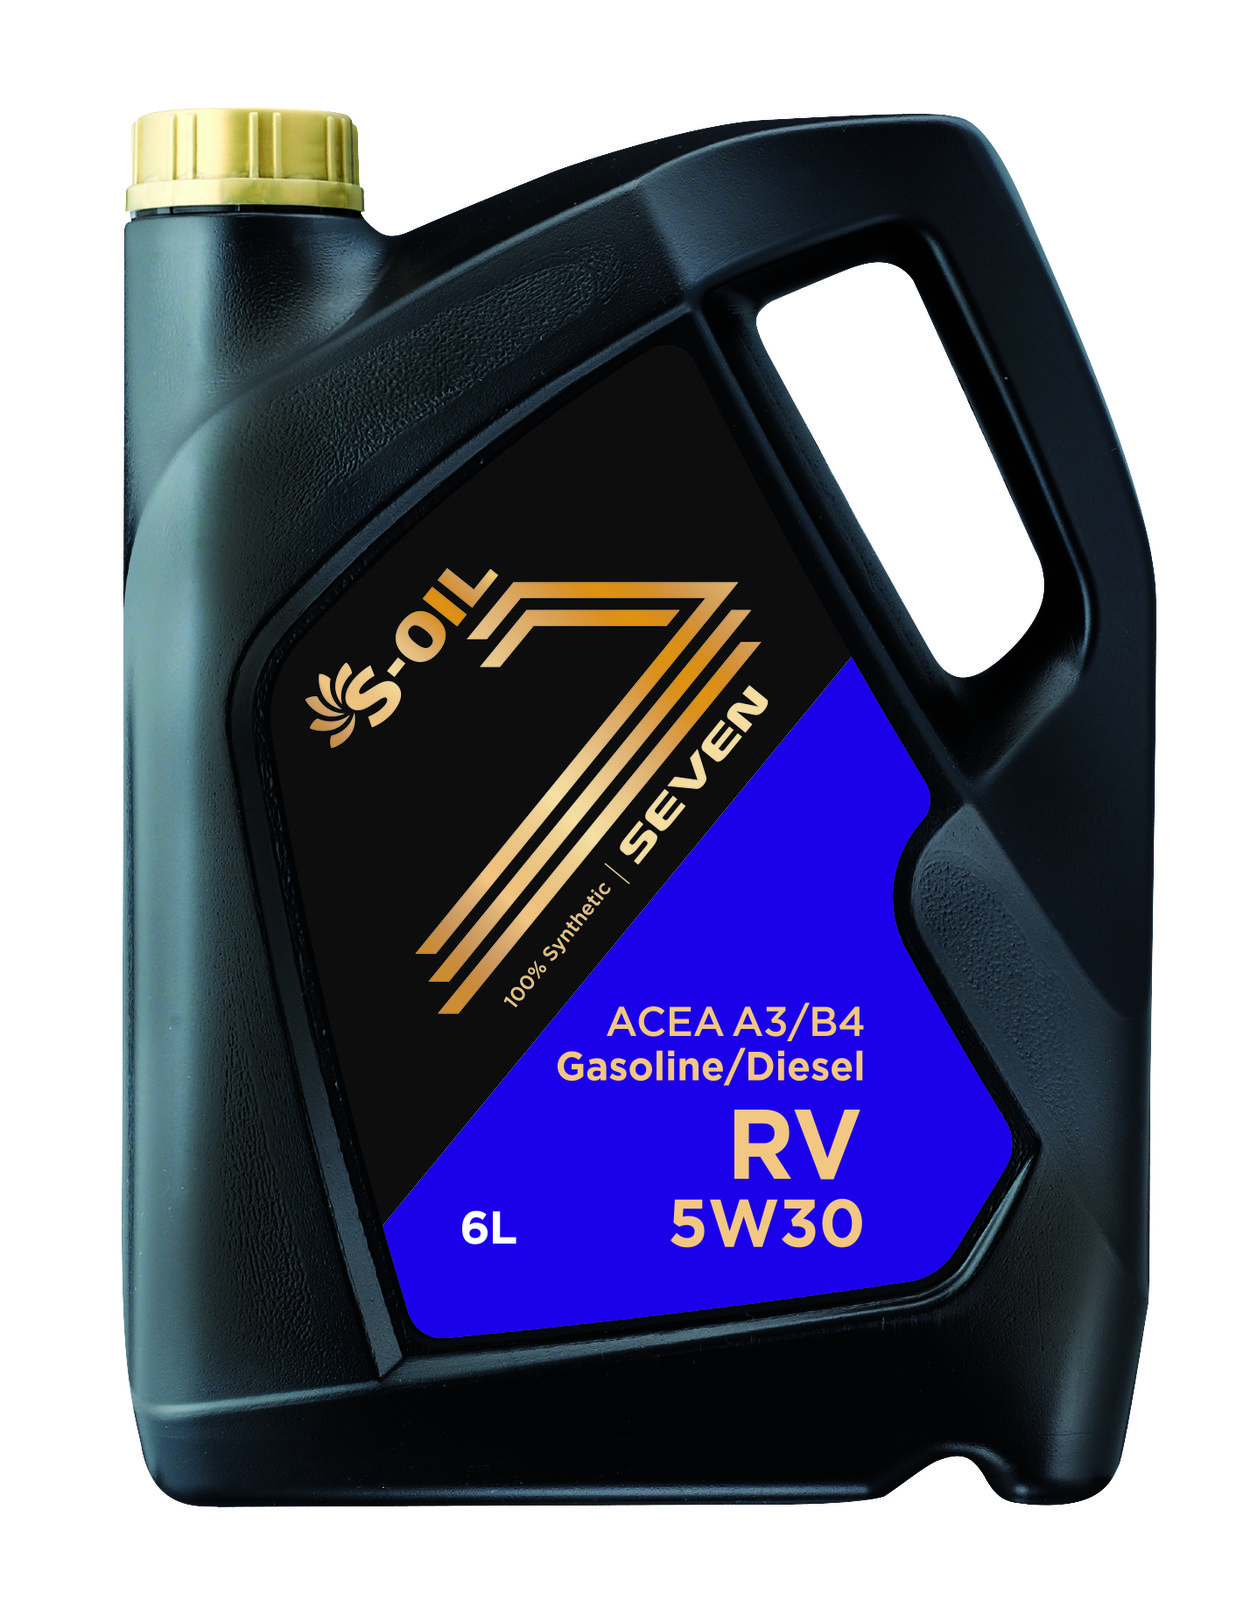 S-Oil Seven RV 5W-30 свежее - Лабораторные анализы - Свежие - Форум oil .